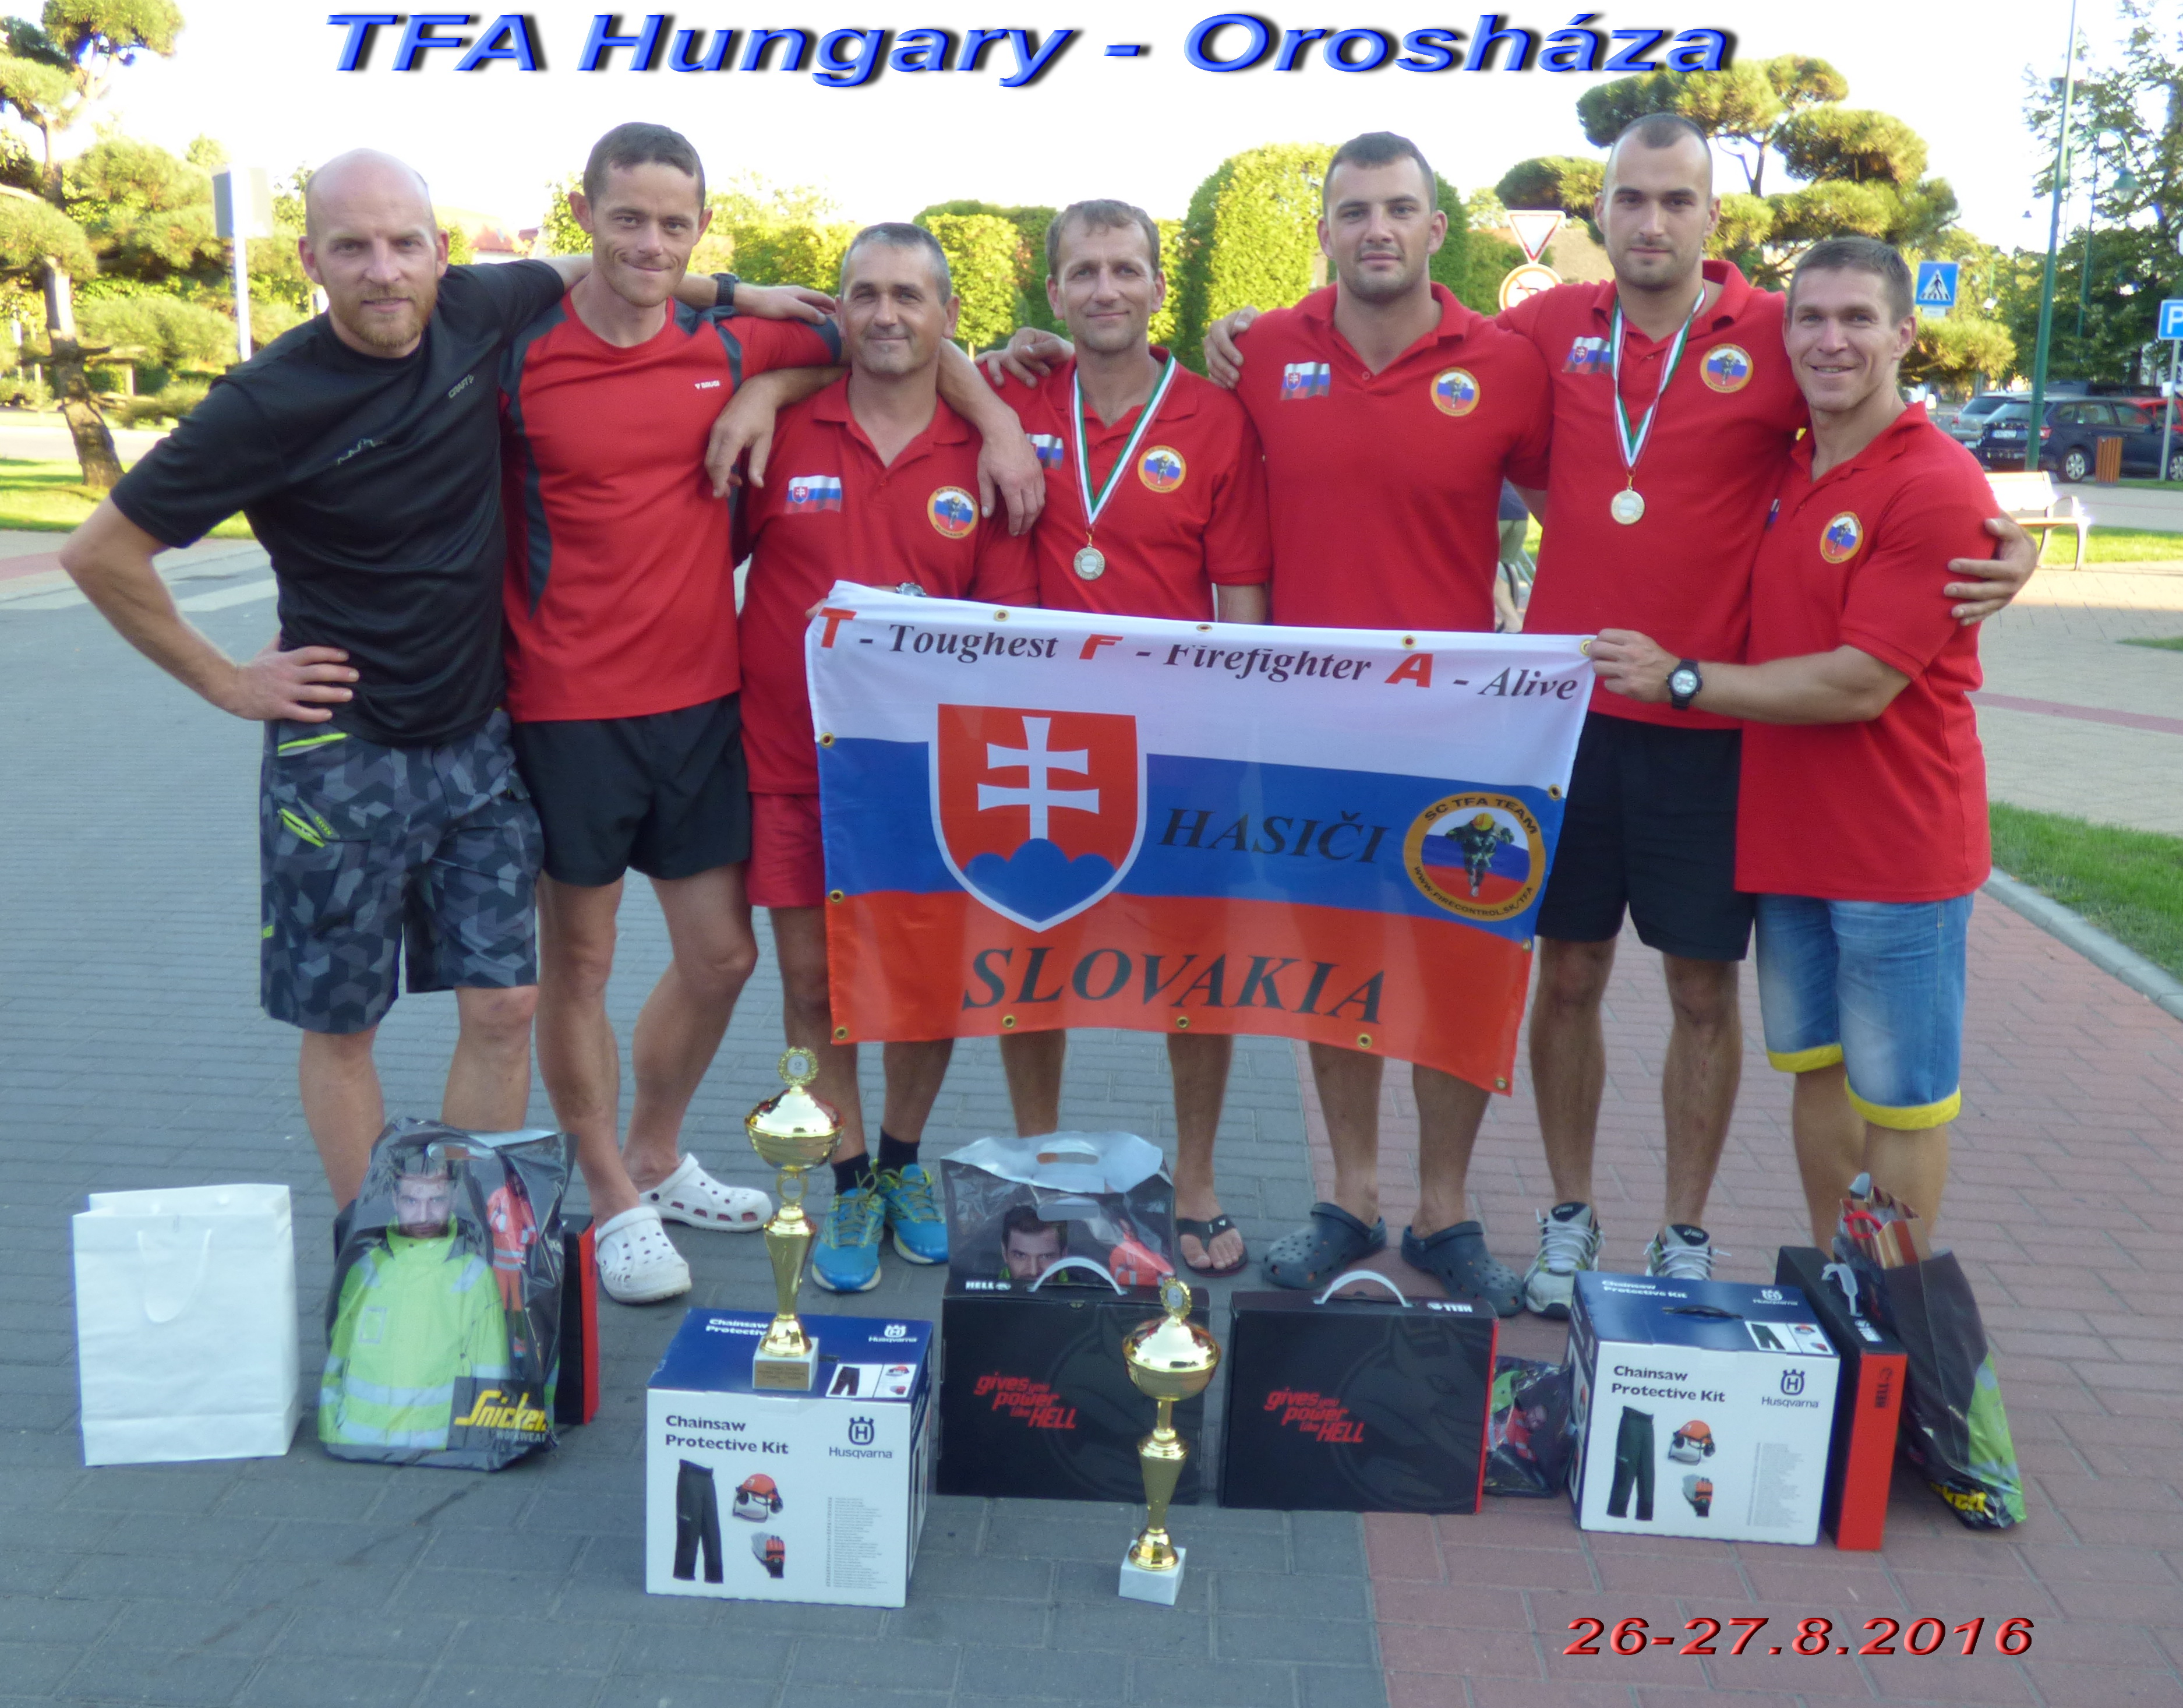 1 - Slovenskí hasiči bodovali na TFA Hungary – Orosháza 2016